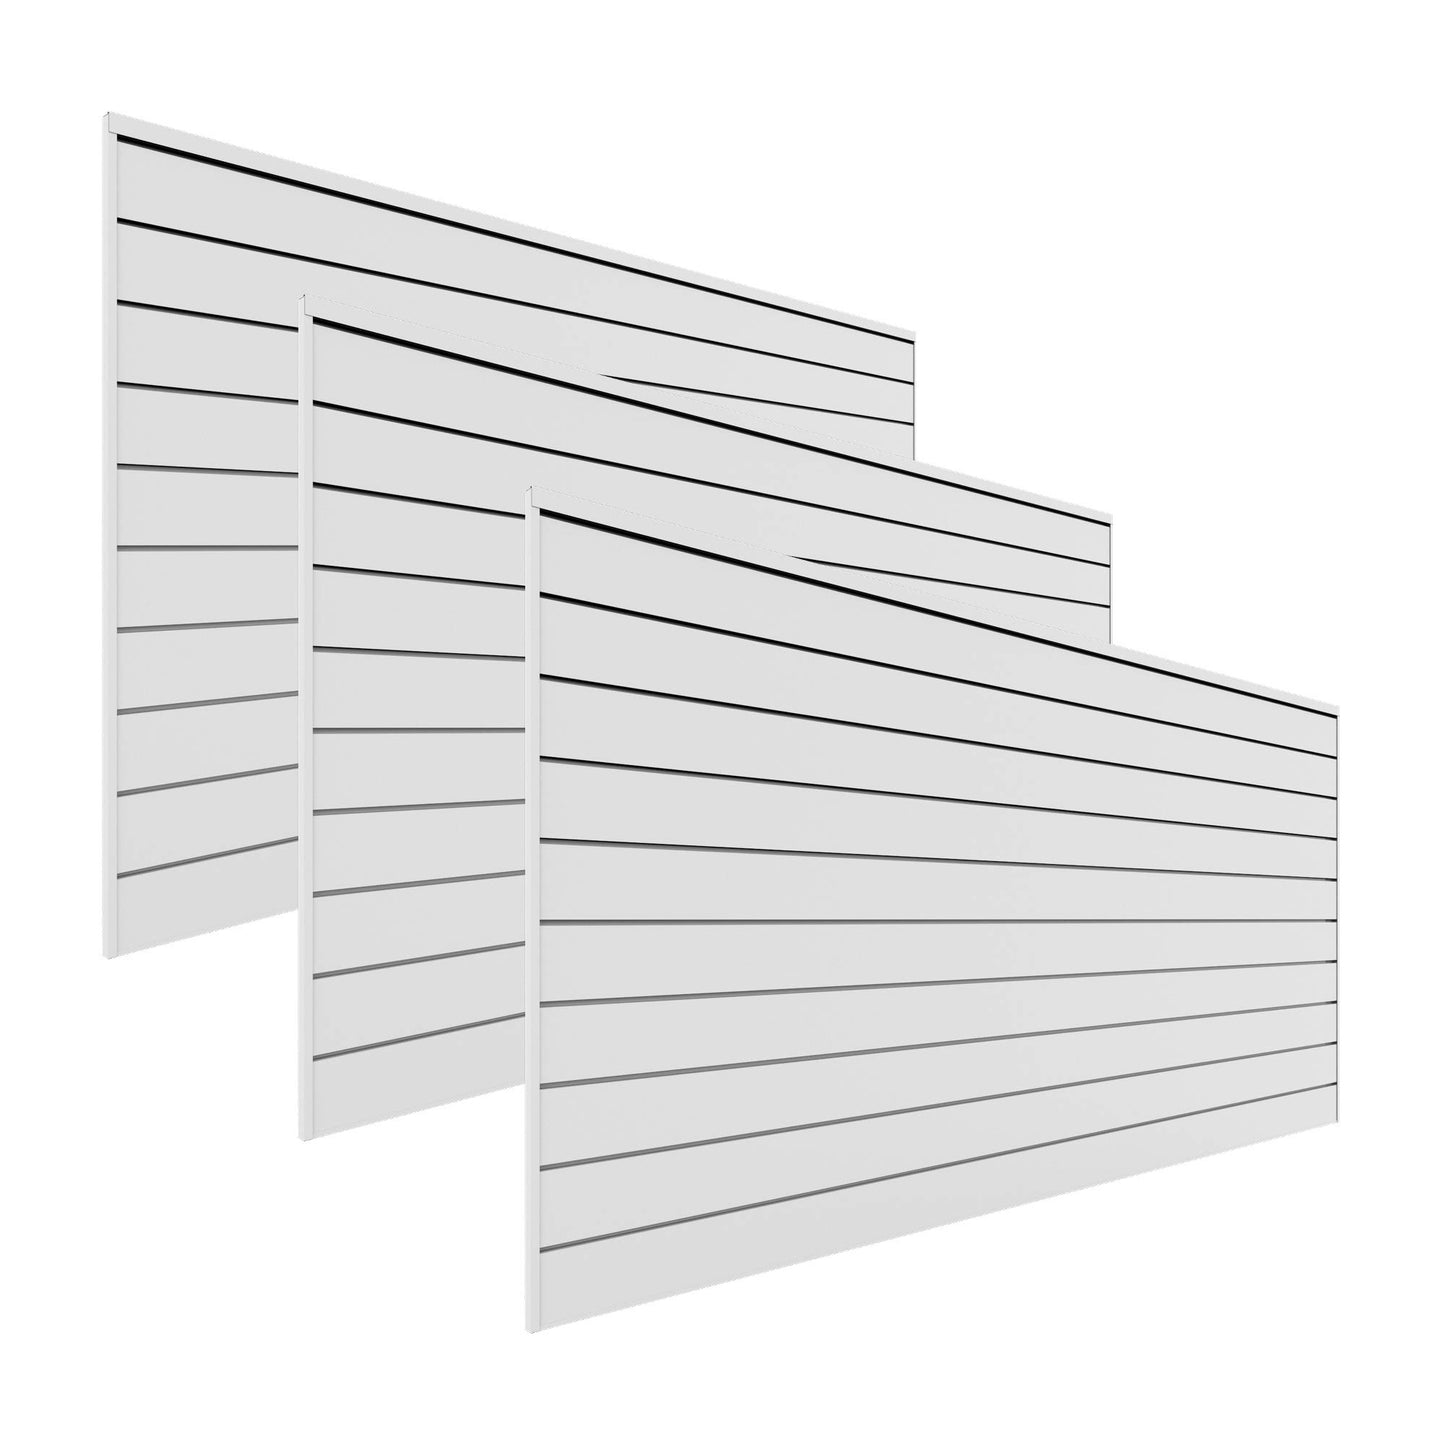 PROSLAT Garage Storage PVC Slatwall Panels -3 Packs of 8 ft. x 4 ft. Sections (96 sq.ft) (White)